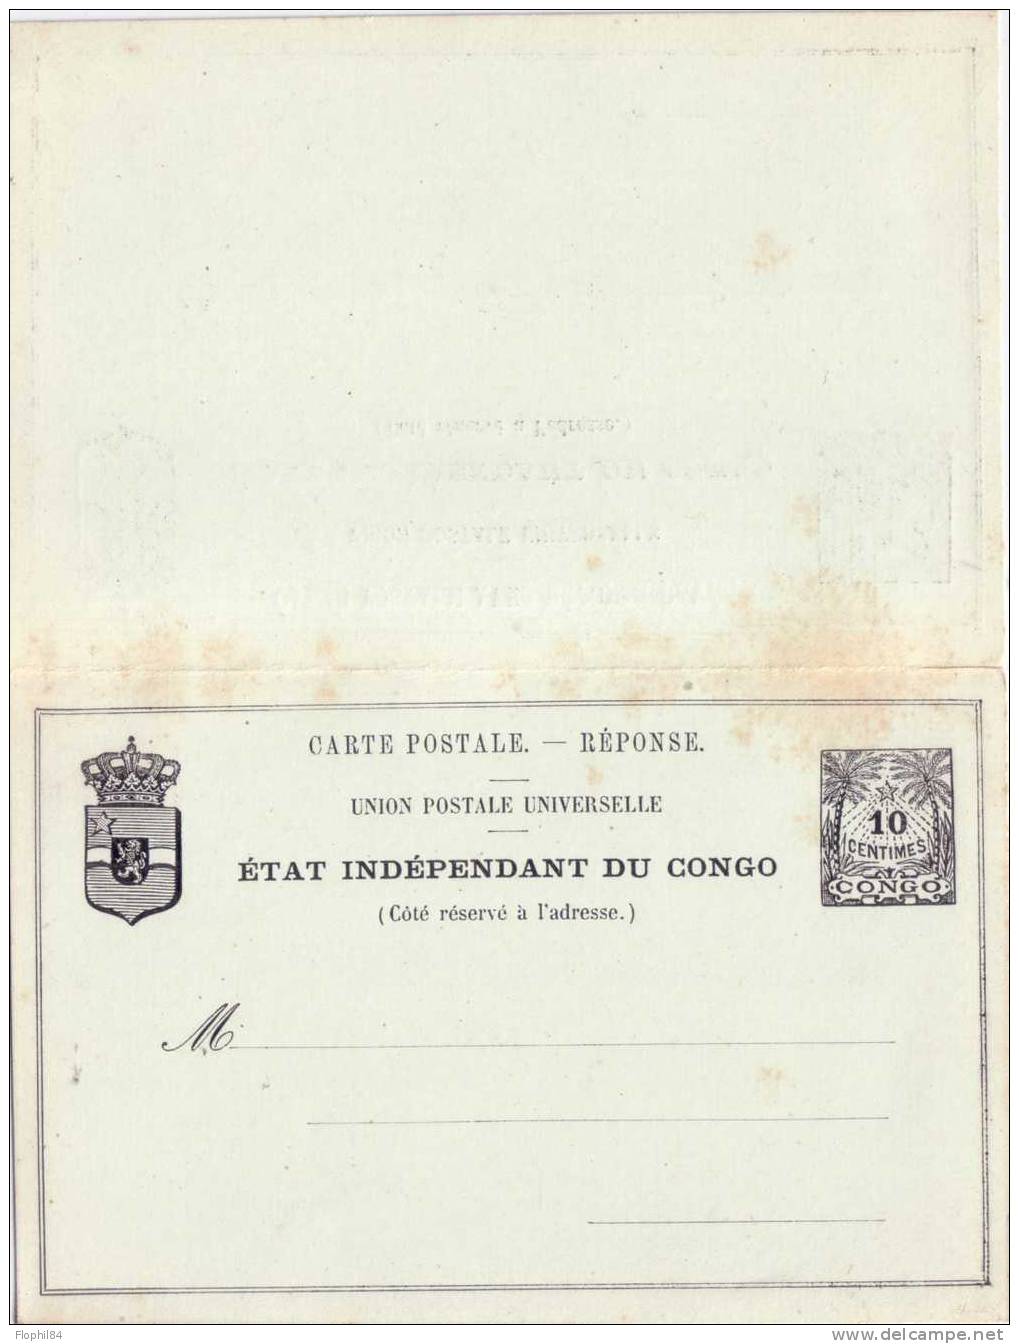 ETAT INDEPENDANT DU CONGO-CARTE A 15c AVEC REPONSE PAYEE A 10c - ROUSSEURS. - Stamped Stationery